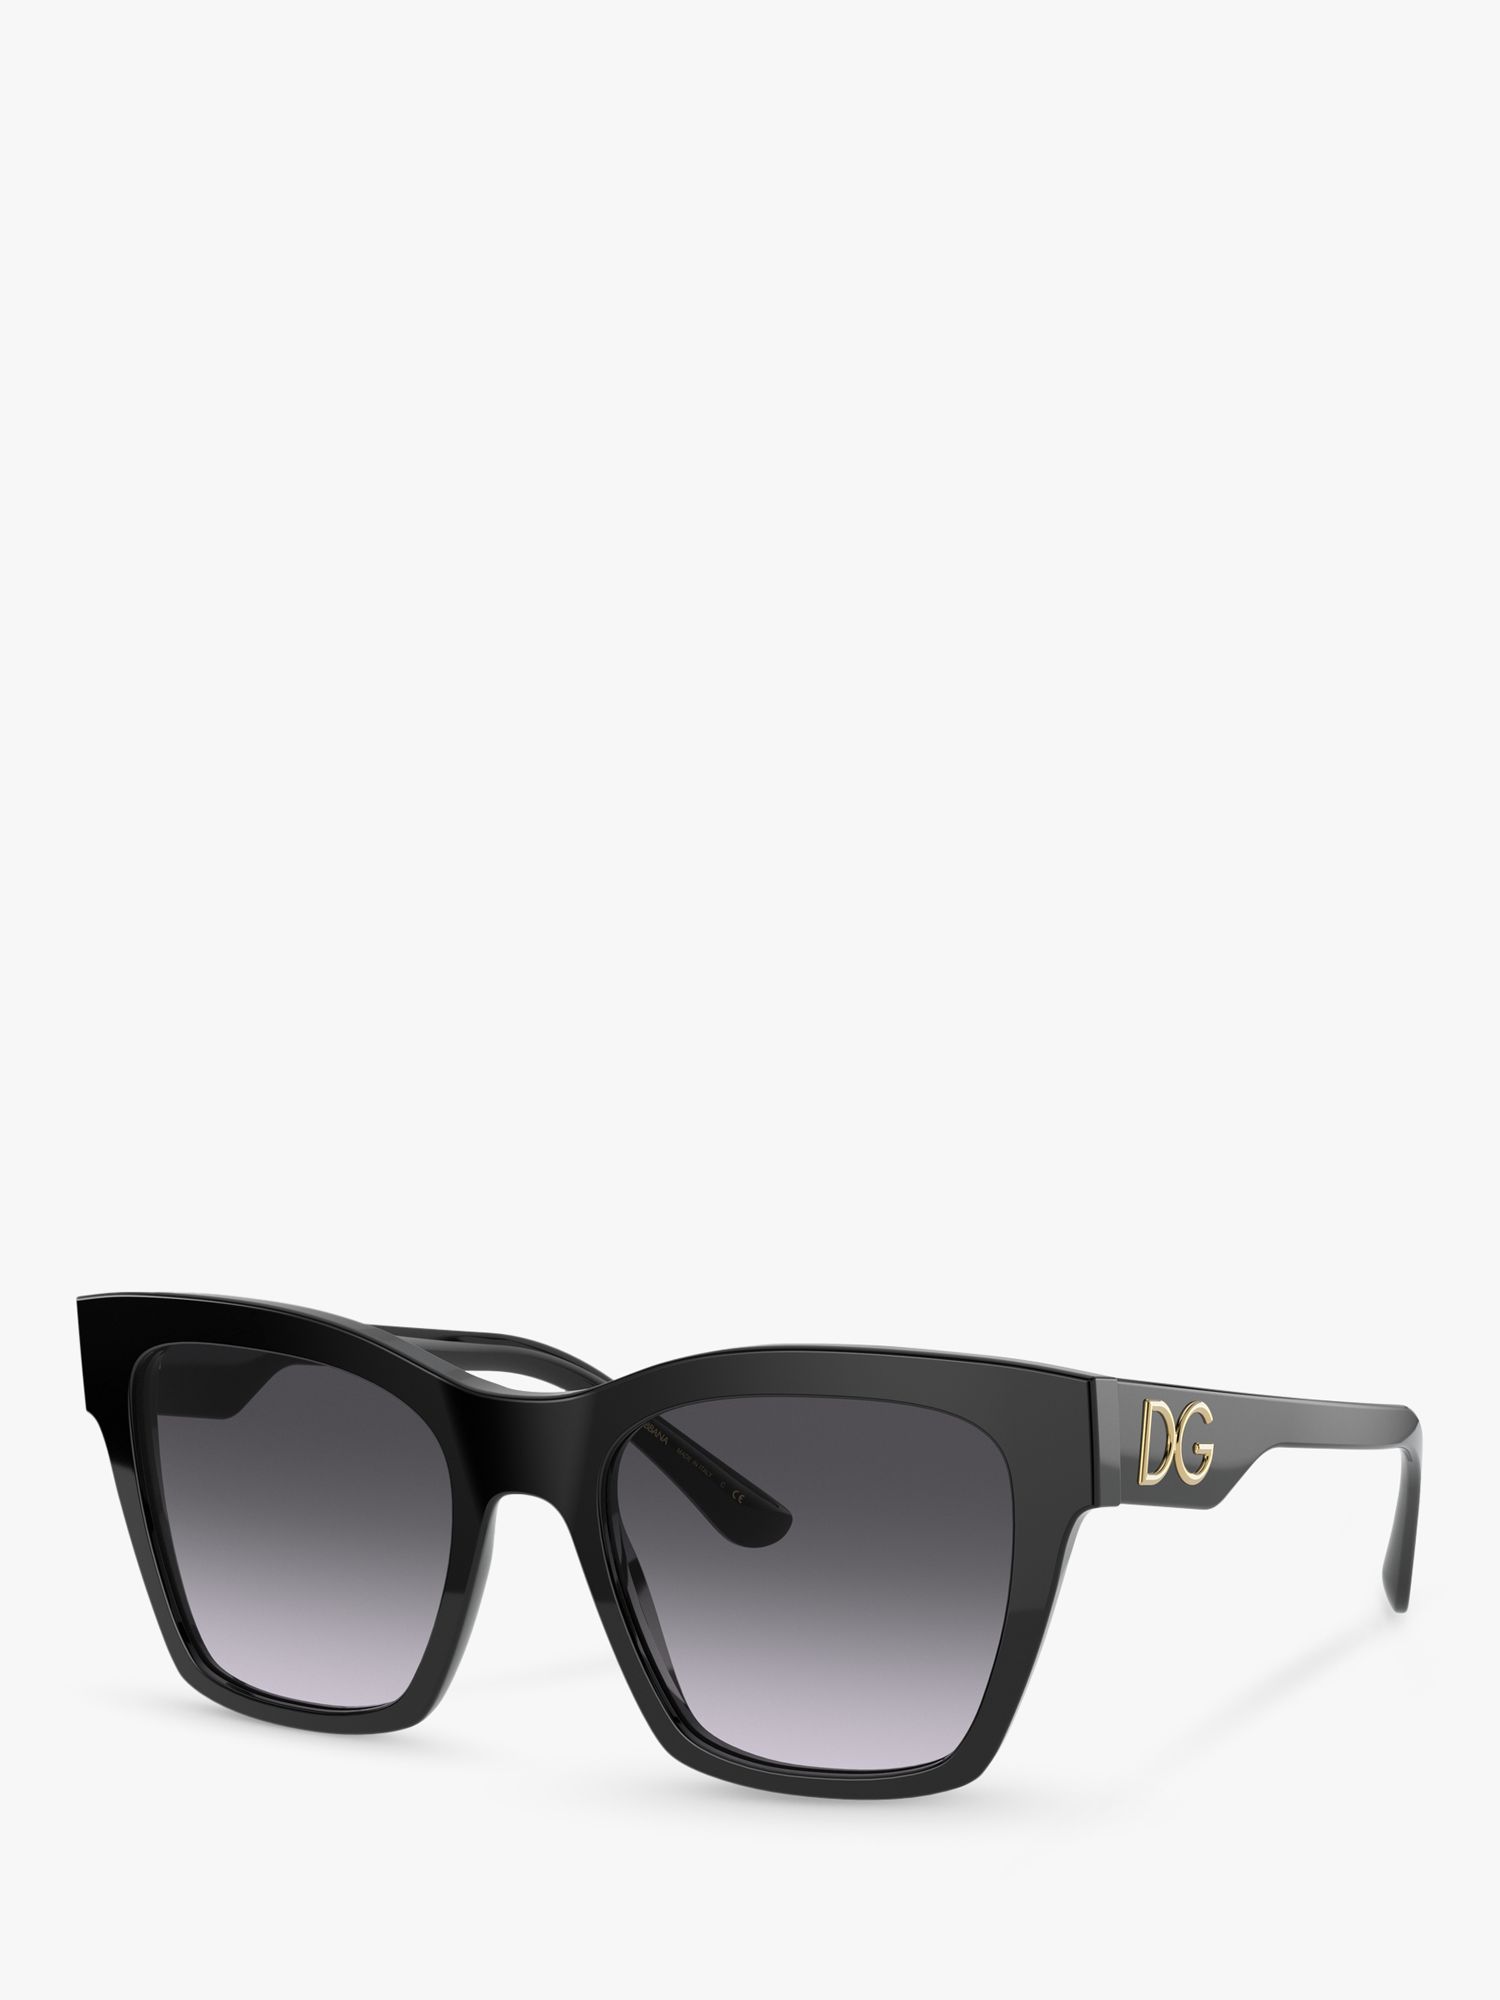 Dolce & Gabbana DG4384 Women's Square Sunglasses, Black/Grey Gradient ...